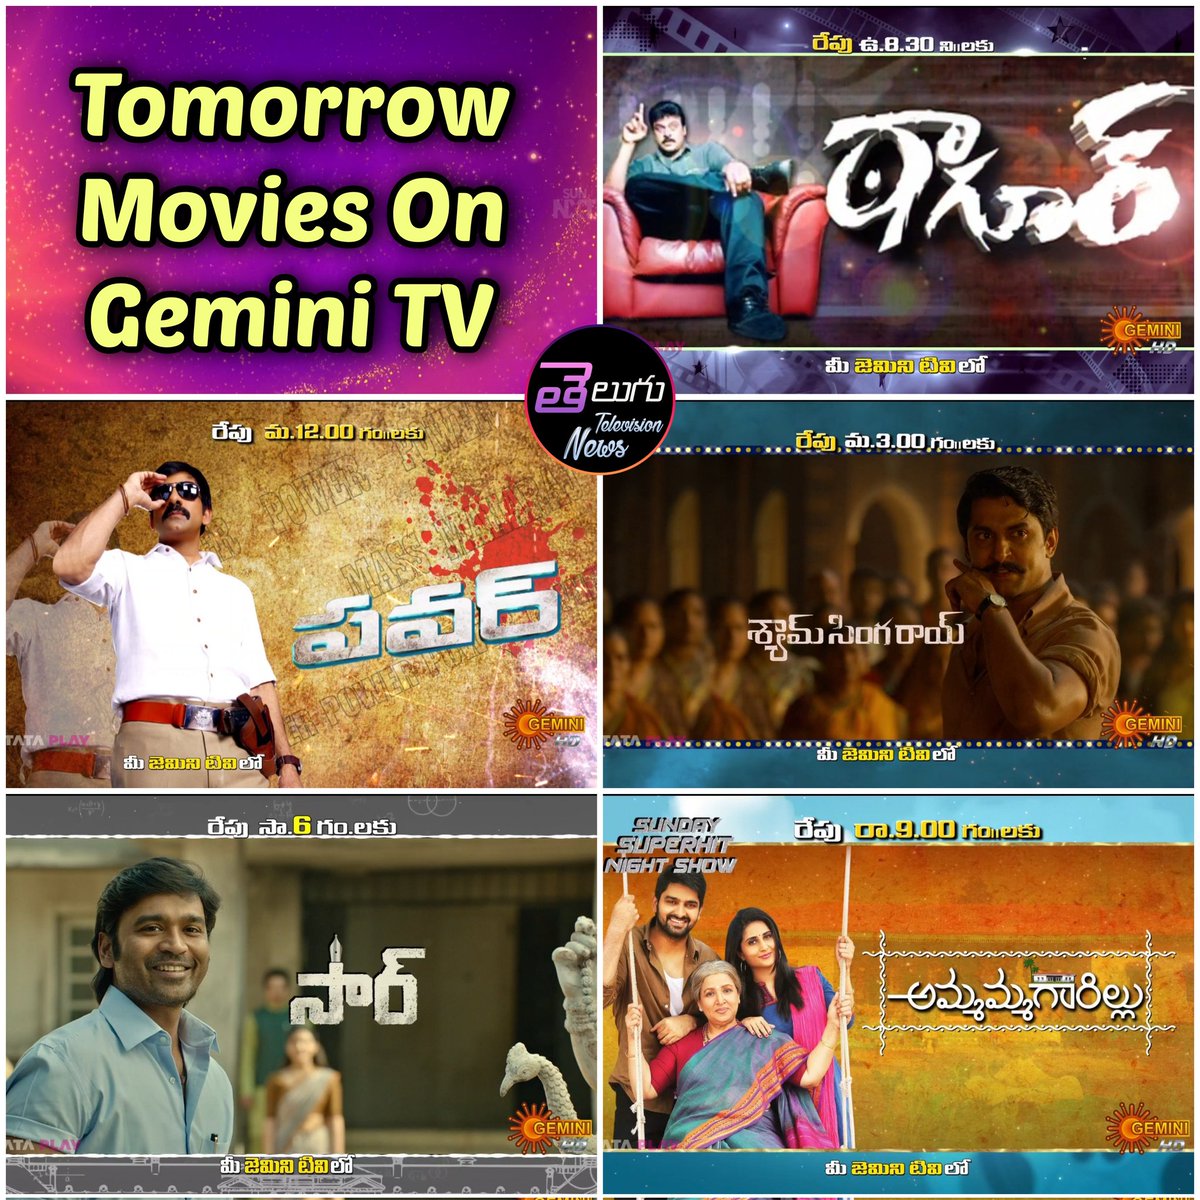 Tomorrow Movies On #GeminiTV 

8.30am:- #Tagore 
12pm:- #Power
3pm:- #ShyamSinghaRoy 
6pm:- #SIRMovie 
9pm:- #Ammammagarillu 

#Chiranjeevi #RaviTeja #Nani #Dhanush #Nagashourya